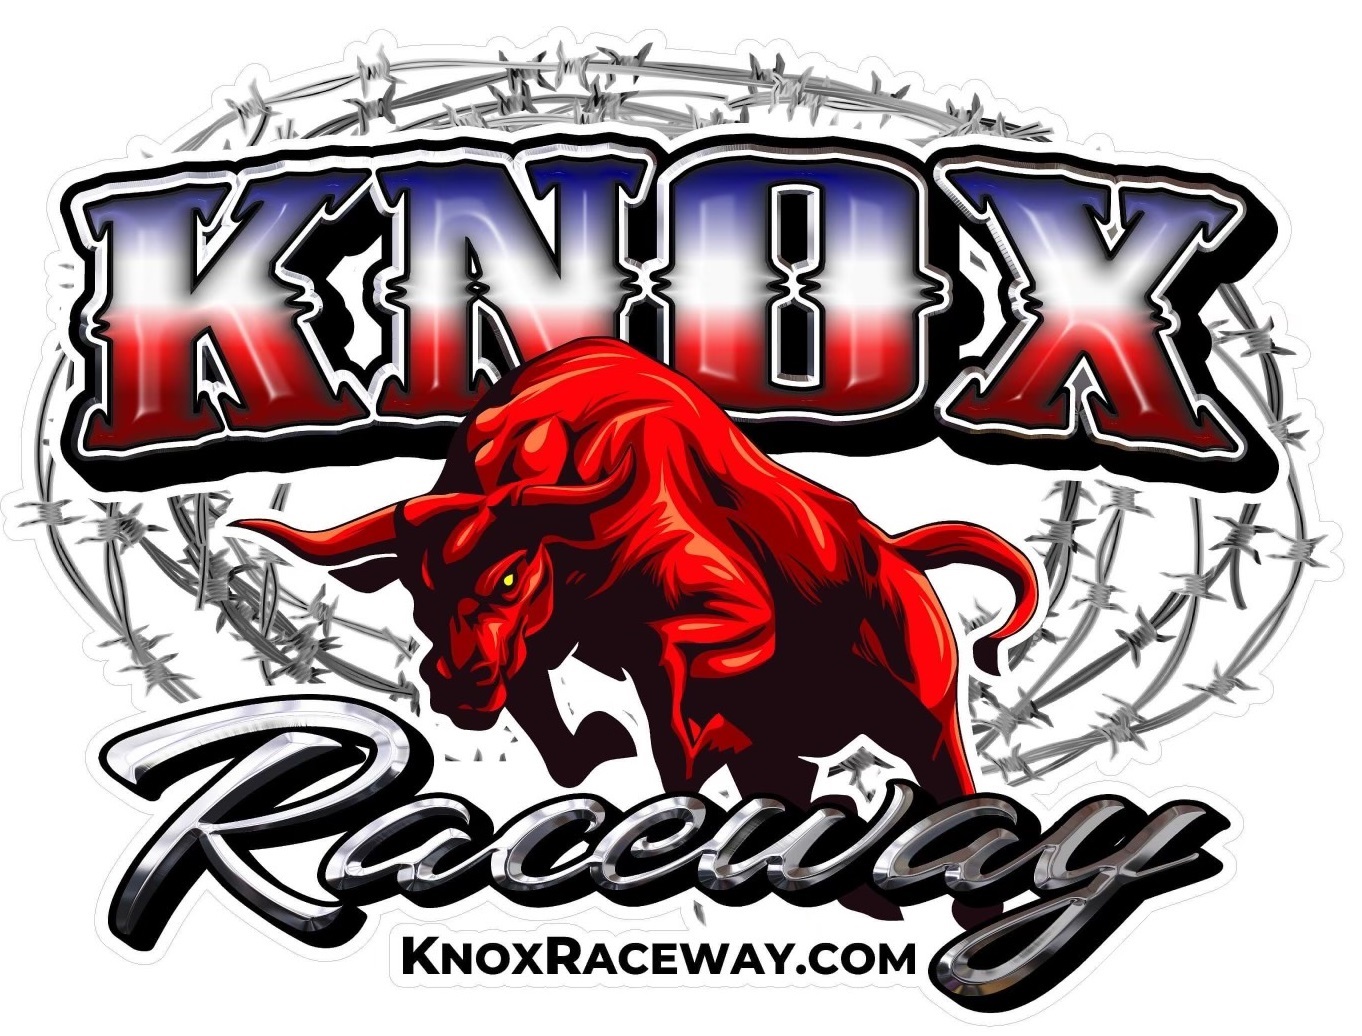 Knox Raceway